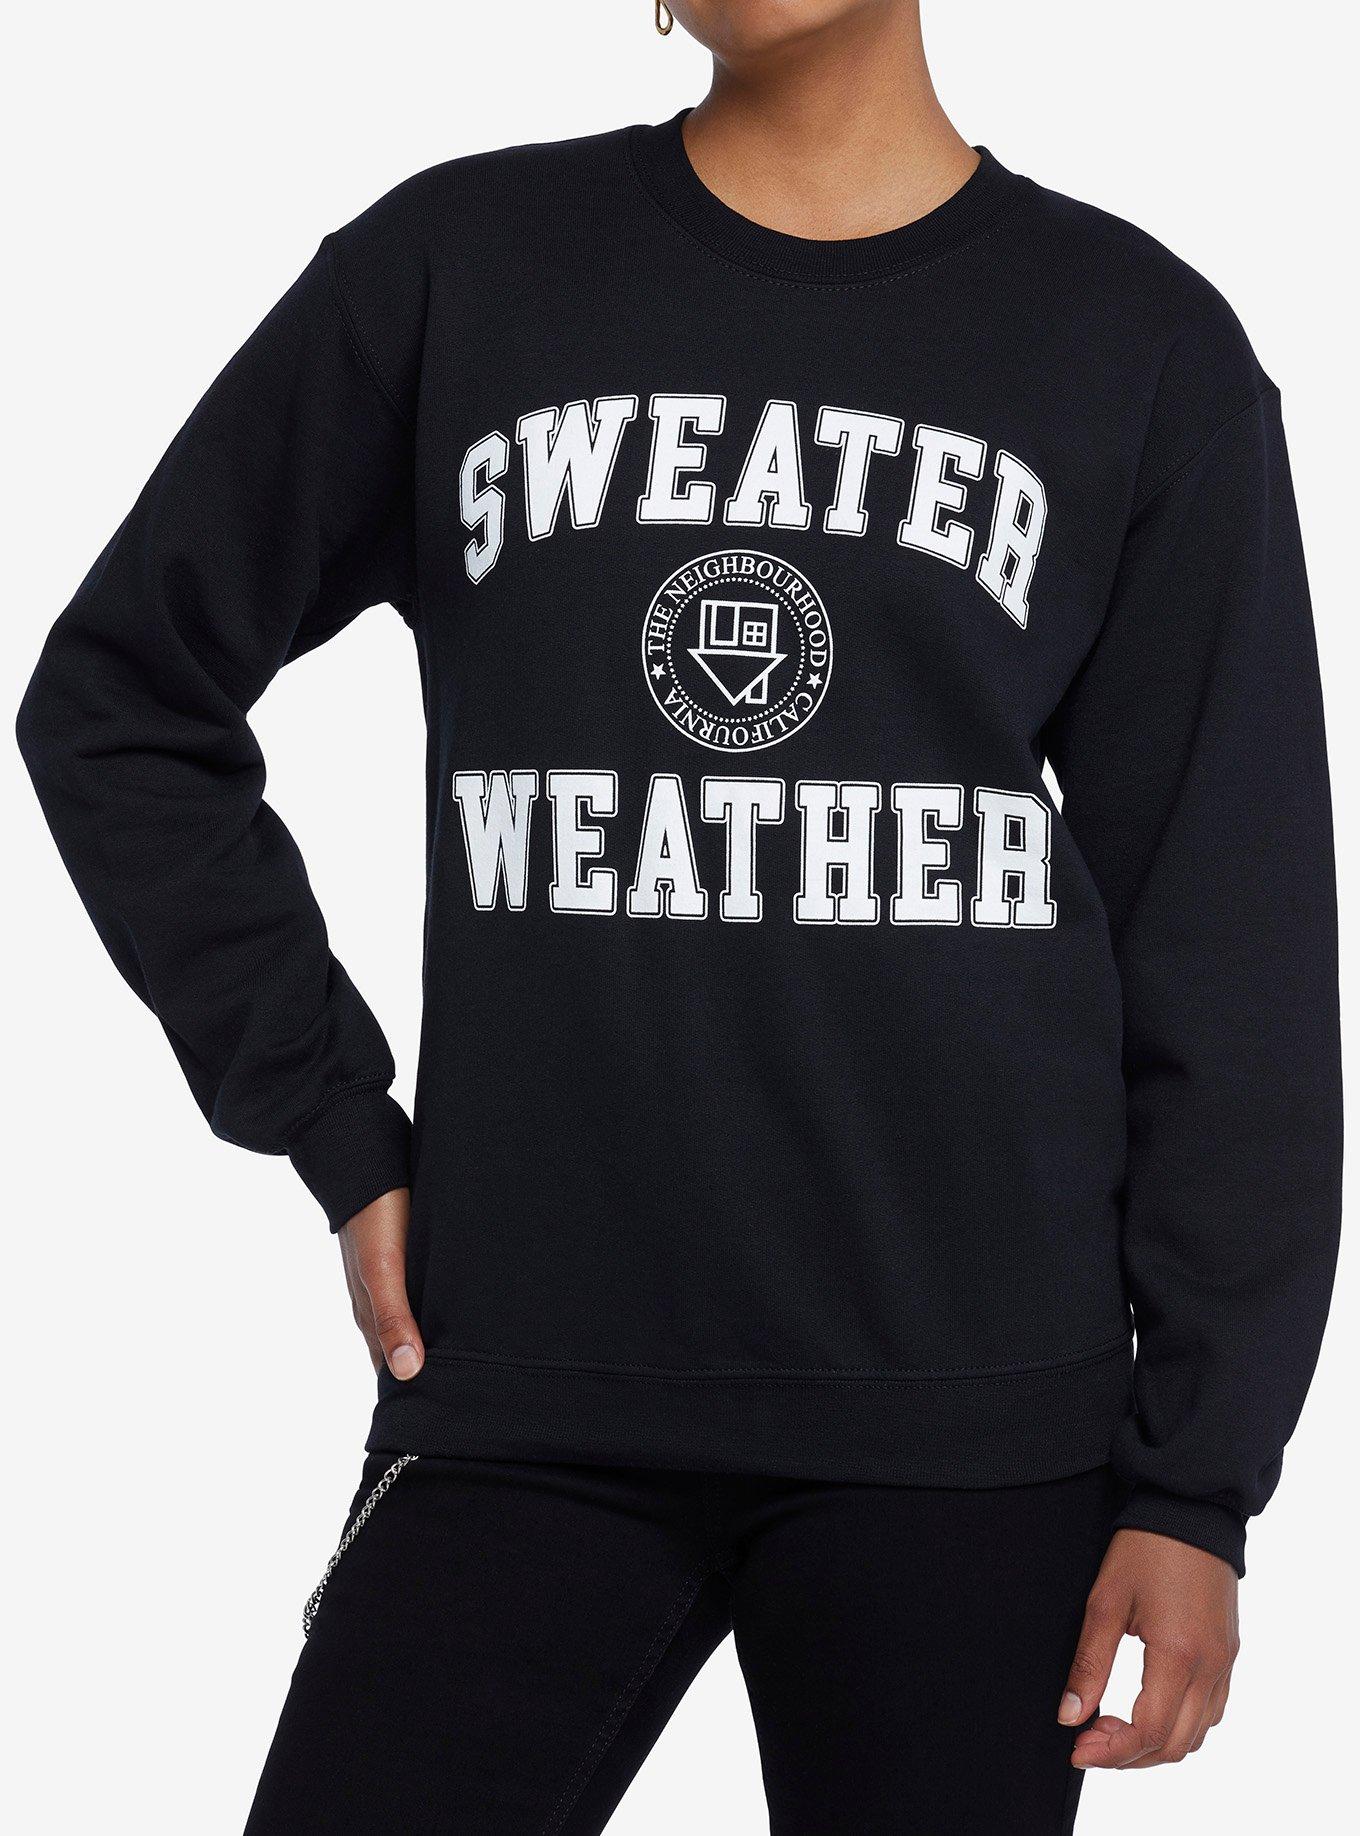 The Neighbourhood – Sweater Weather